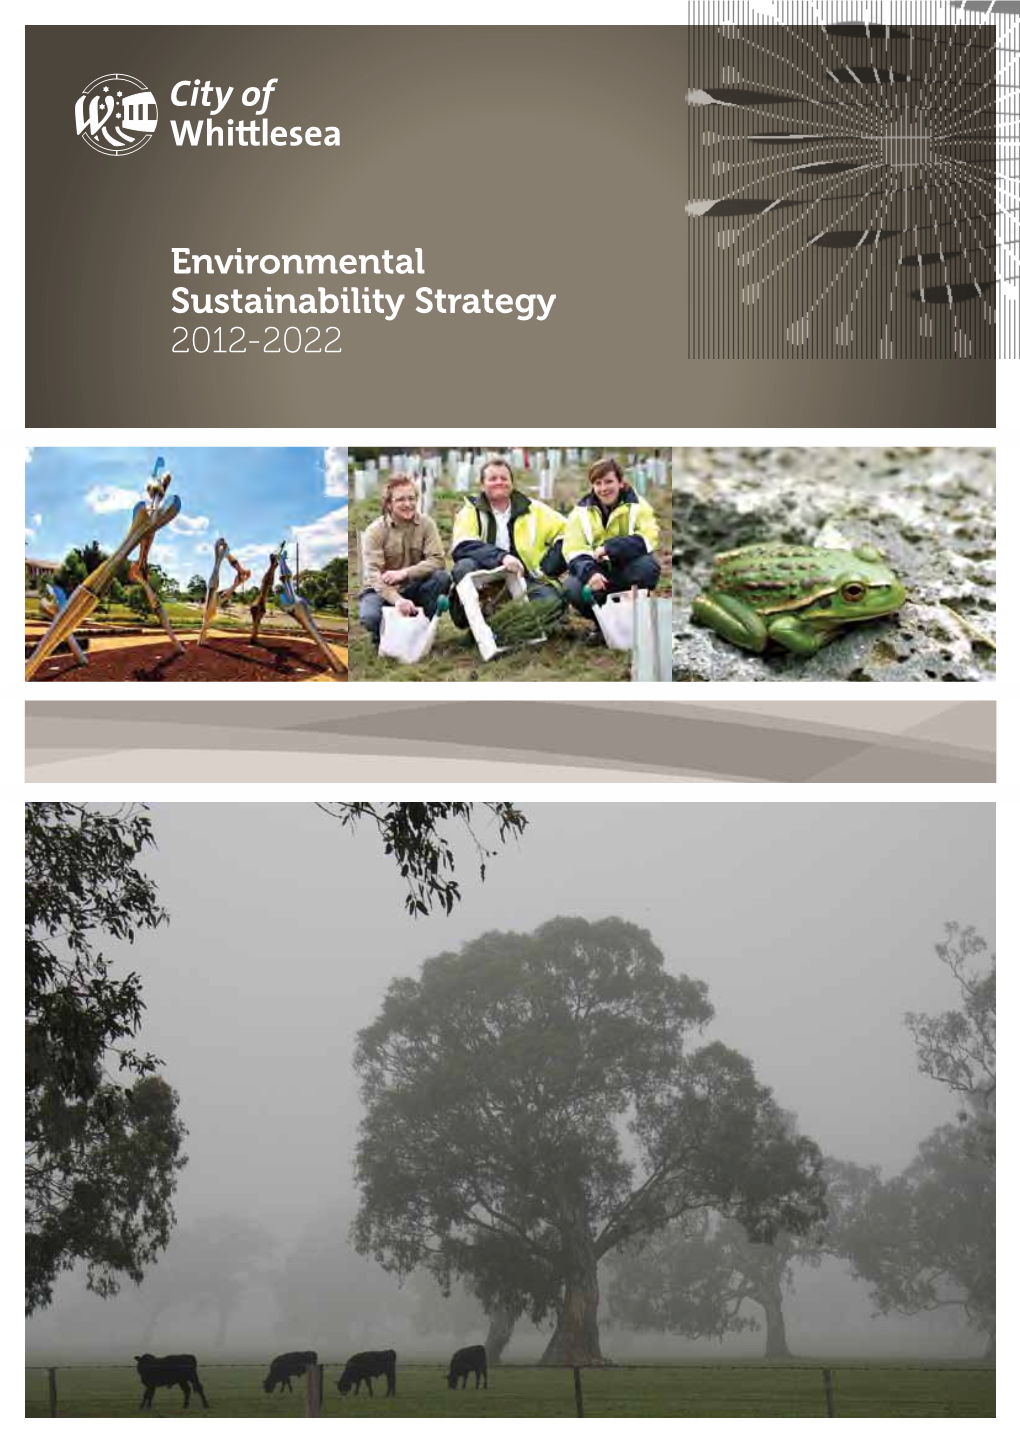 Environmental Sustainability Strategy 2012-2022